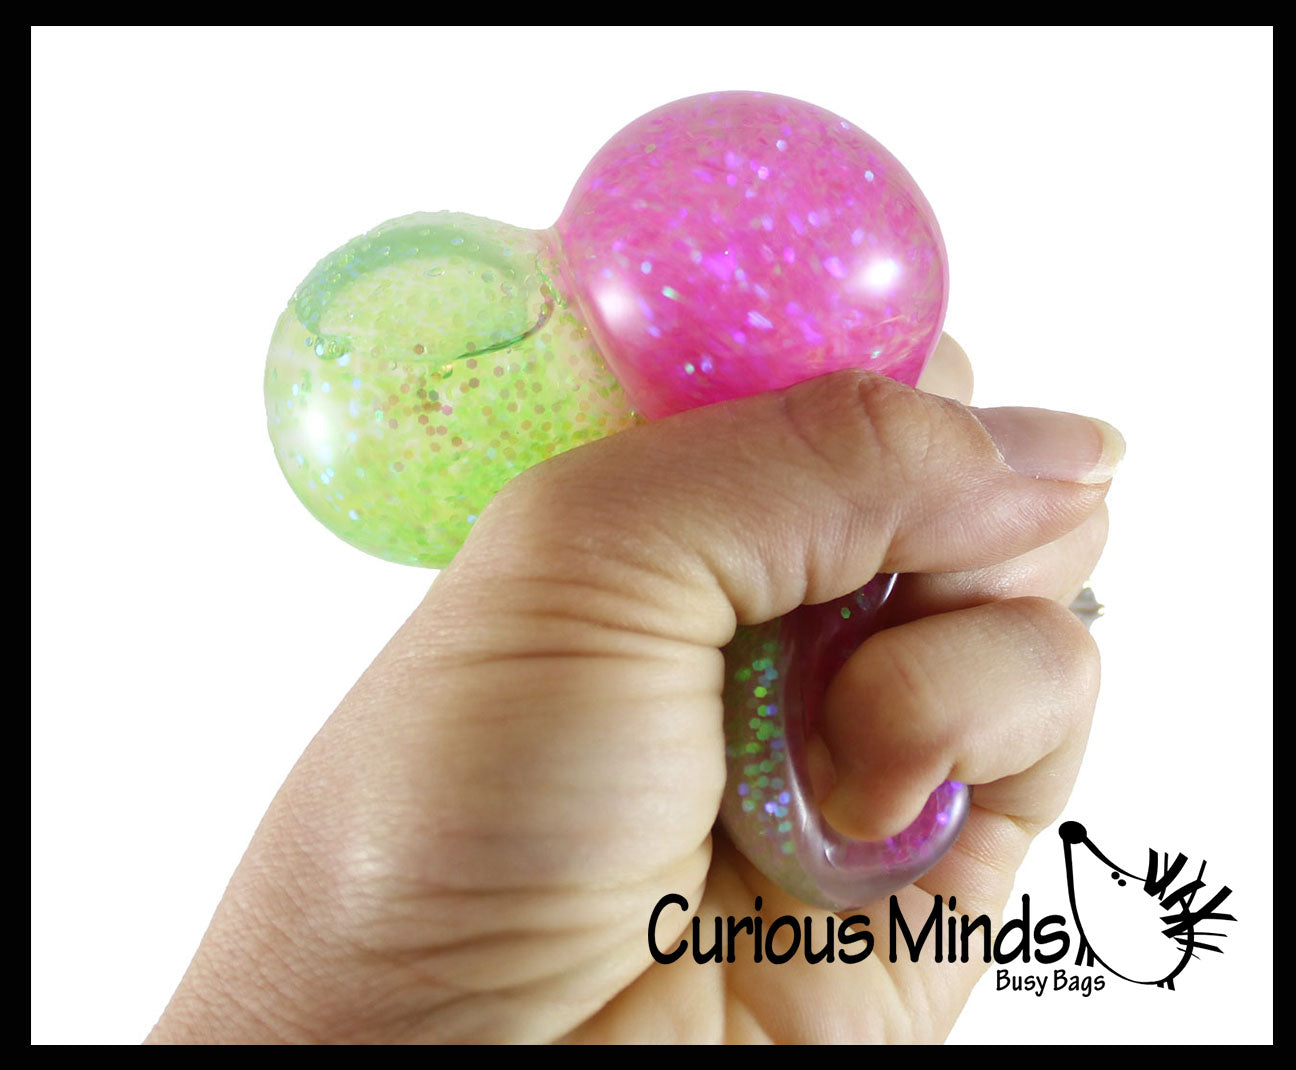 Dual Glitter Swirling Stress Ball -  Sensory, Stress, Fidget Toy Calm - 2 Colors, Squishy Fun